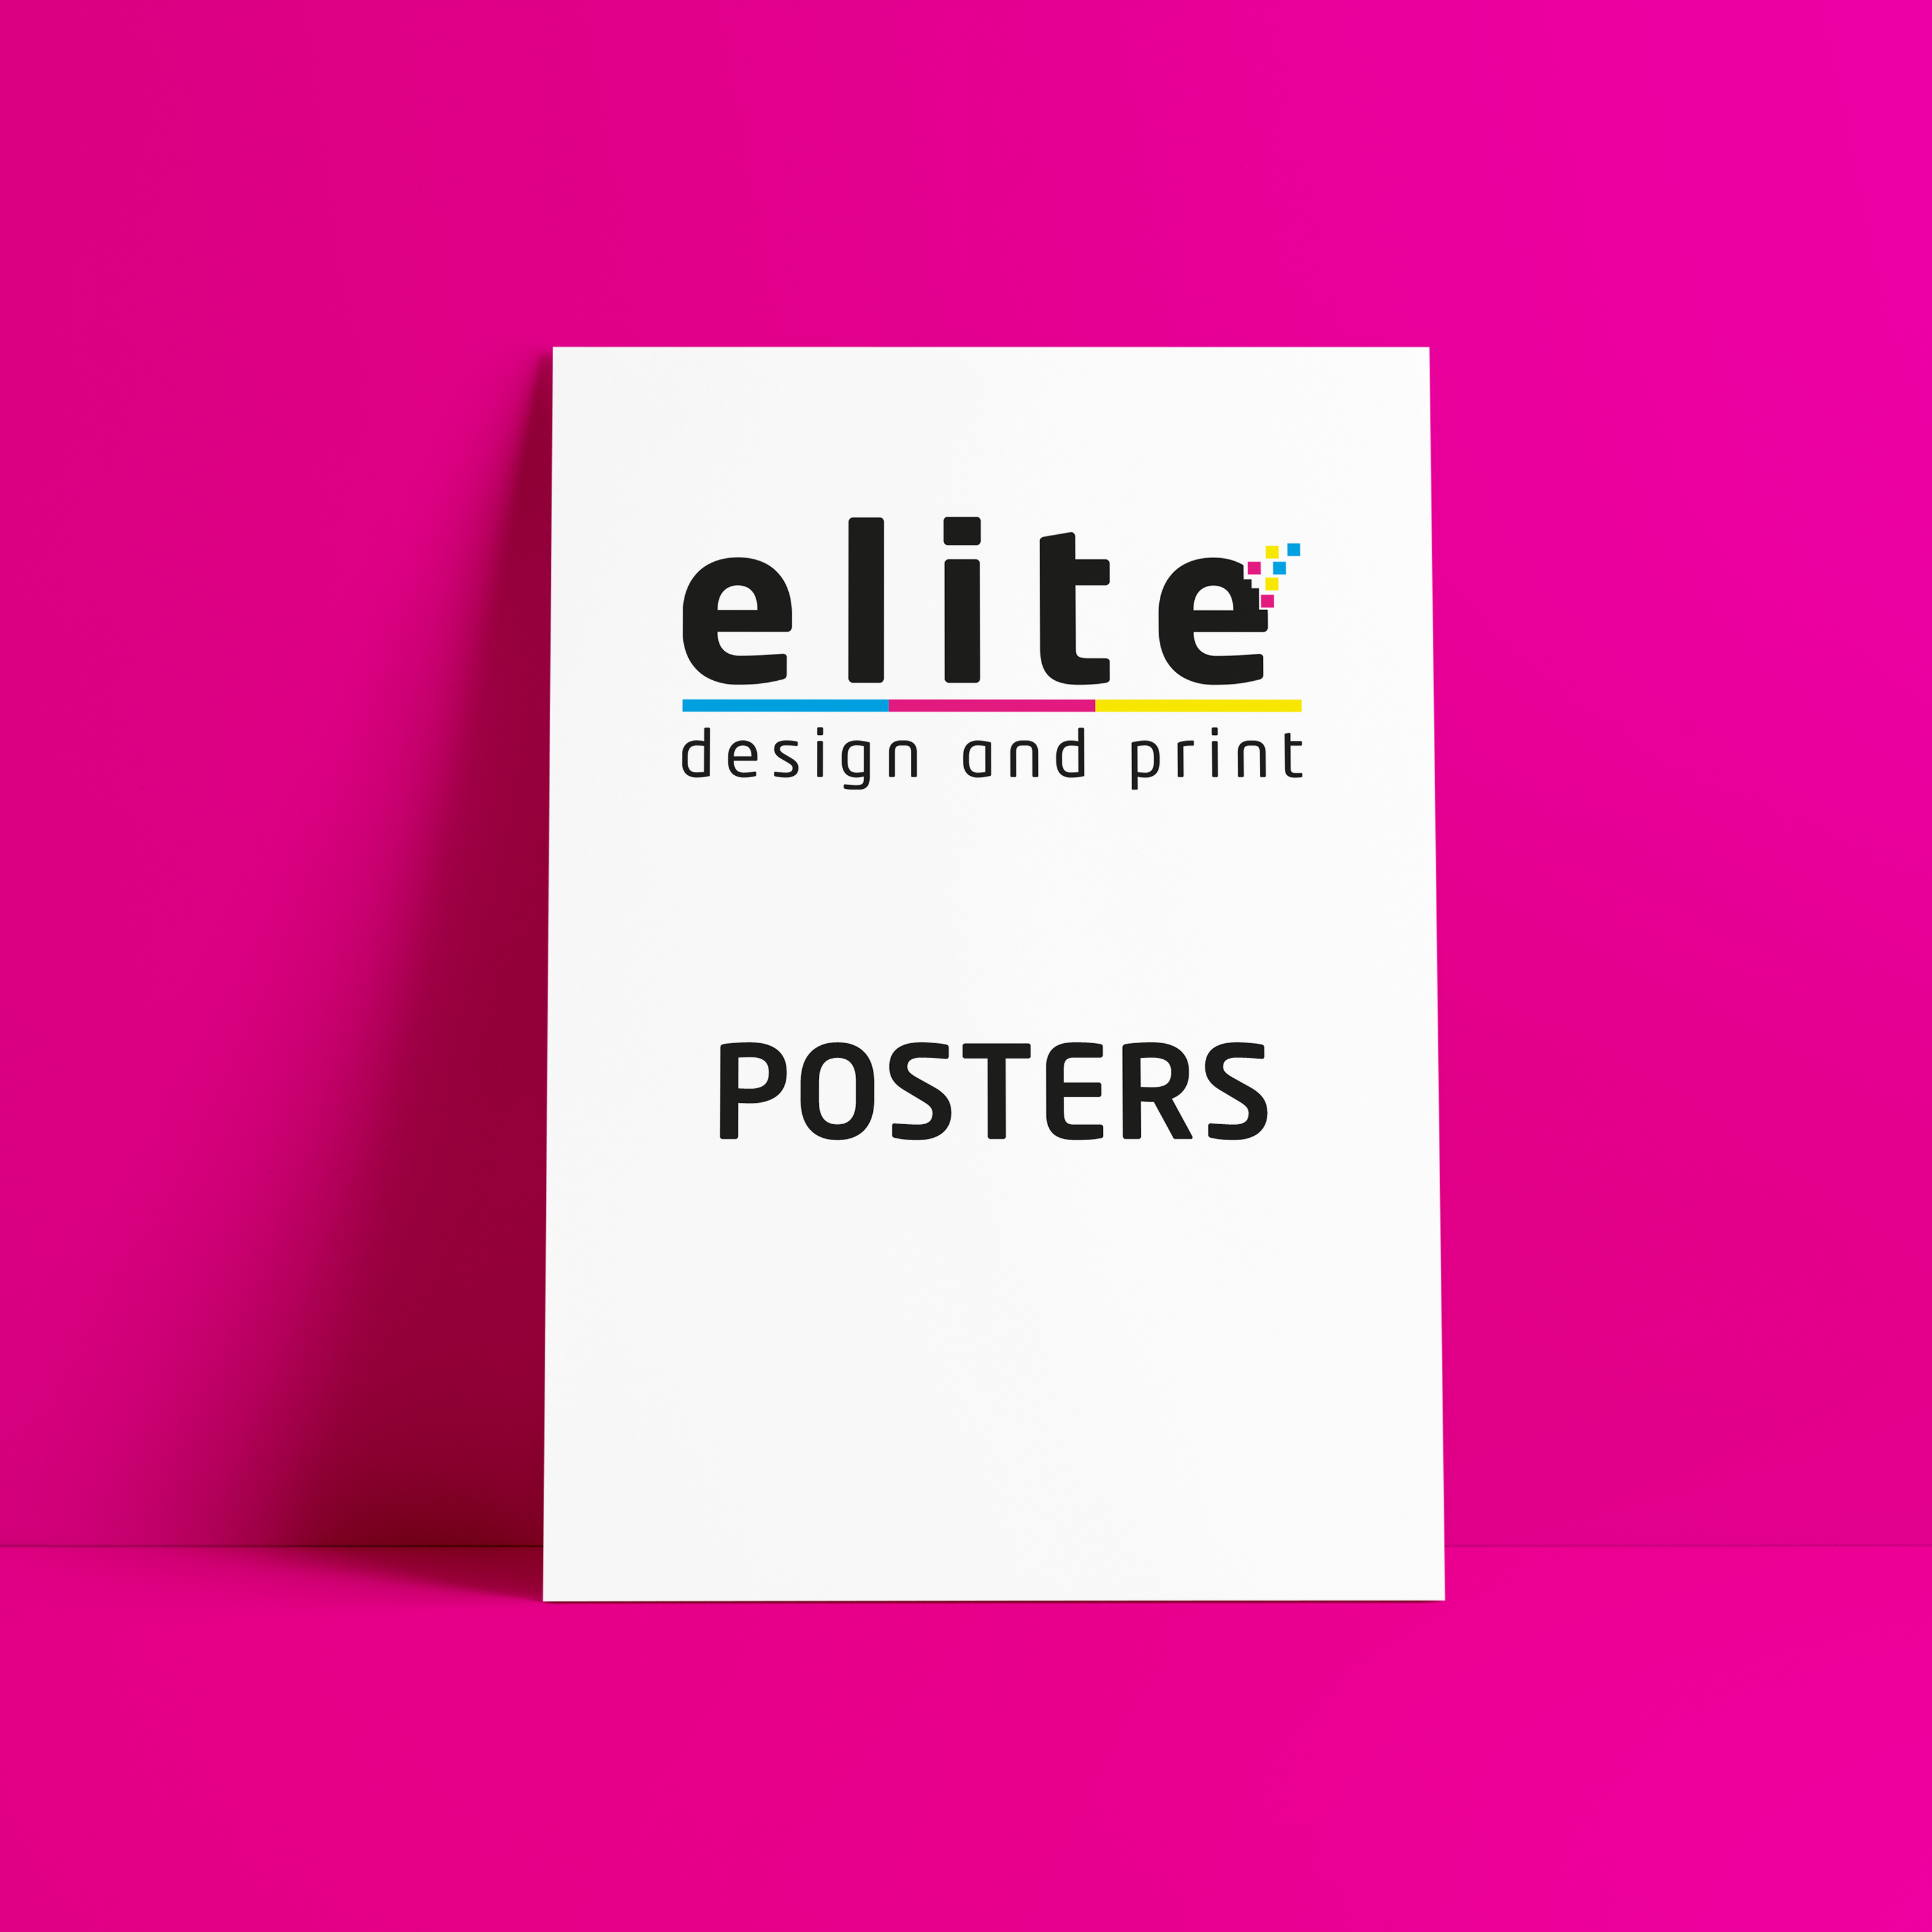 Elite Design and Print